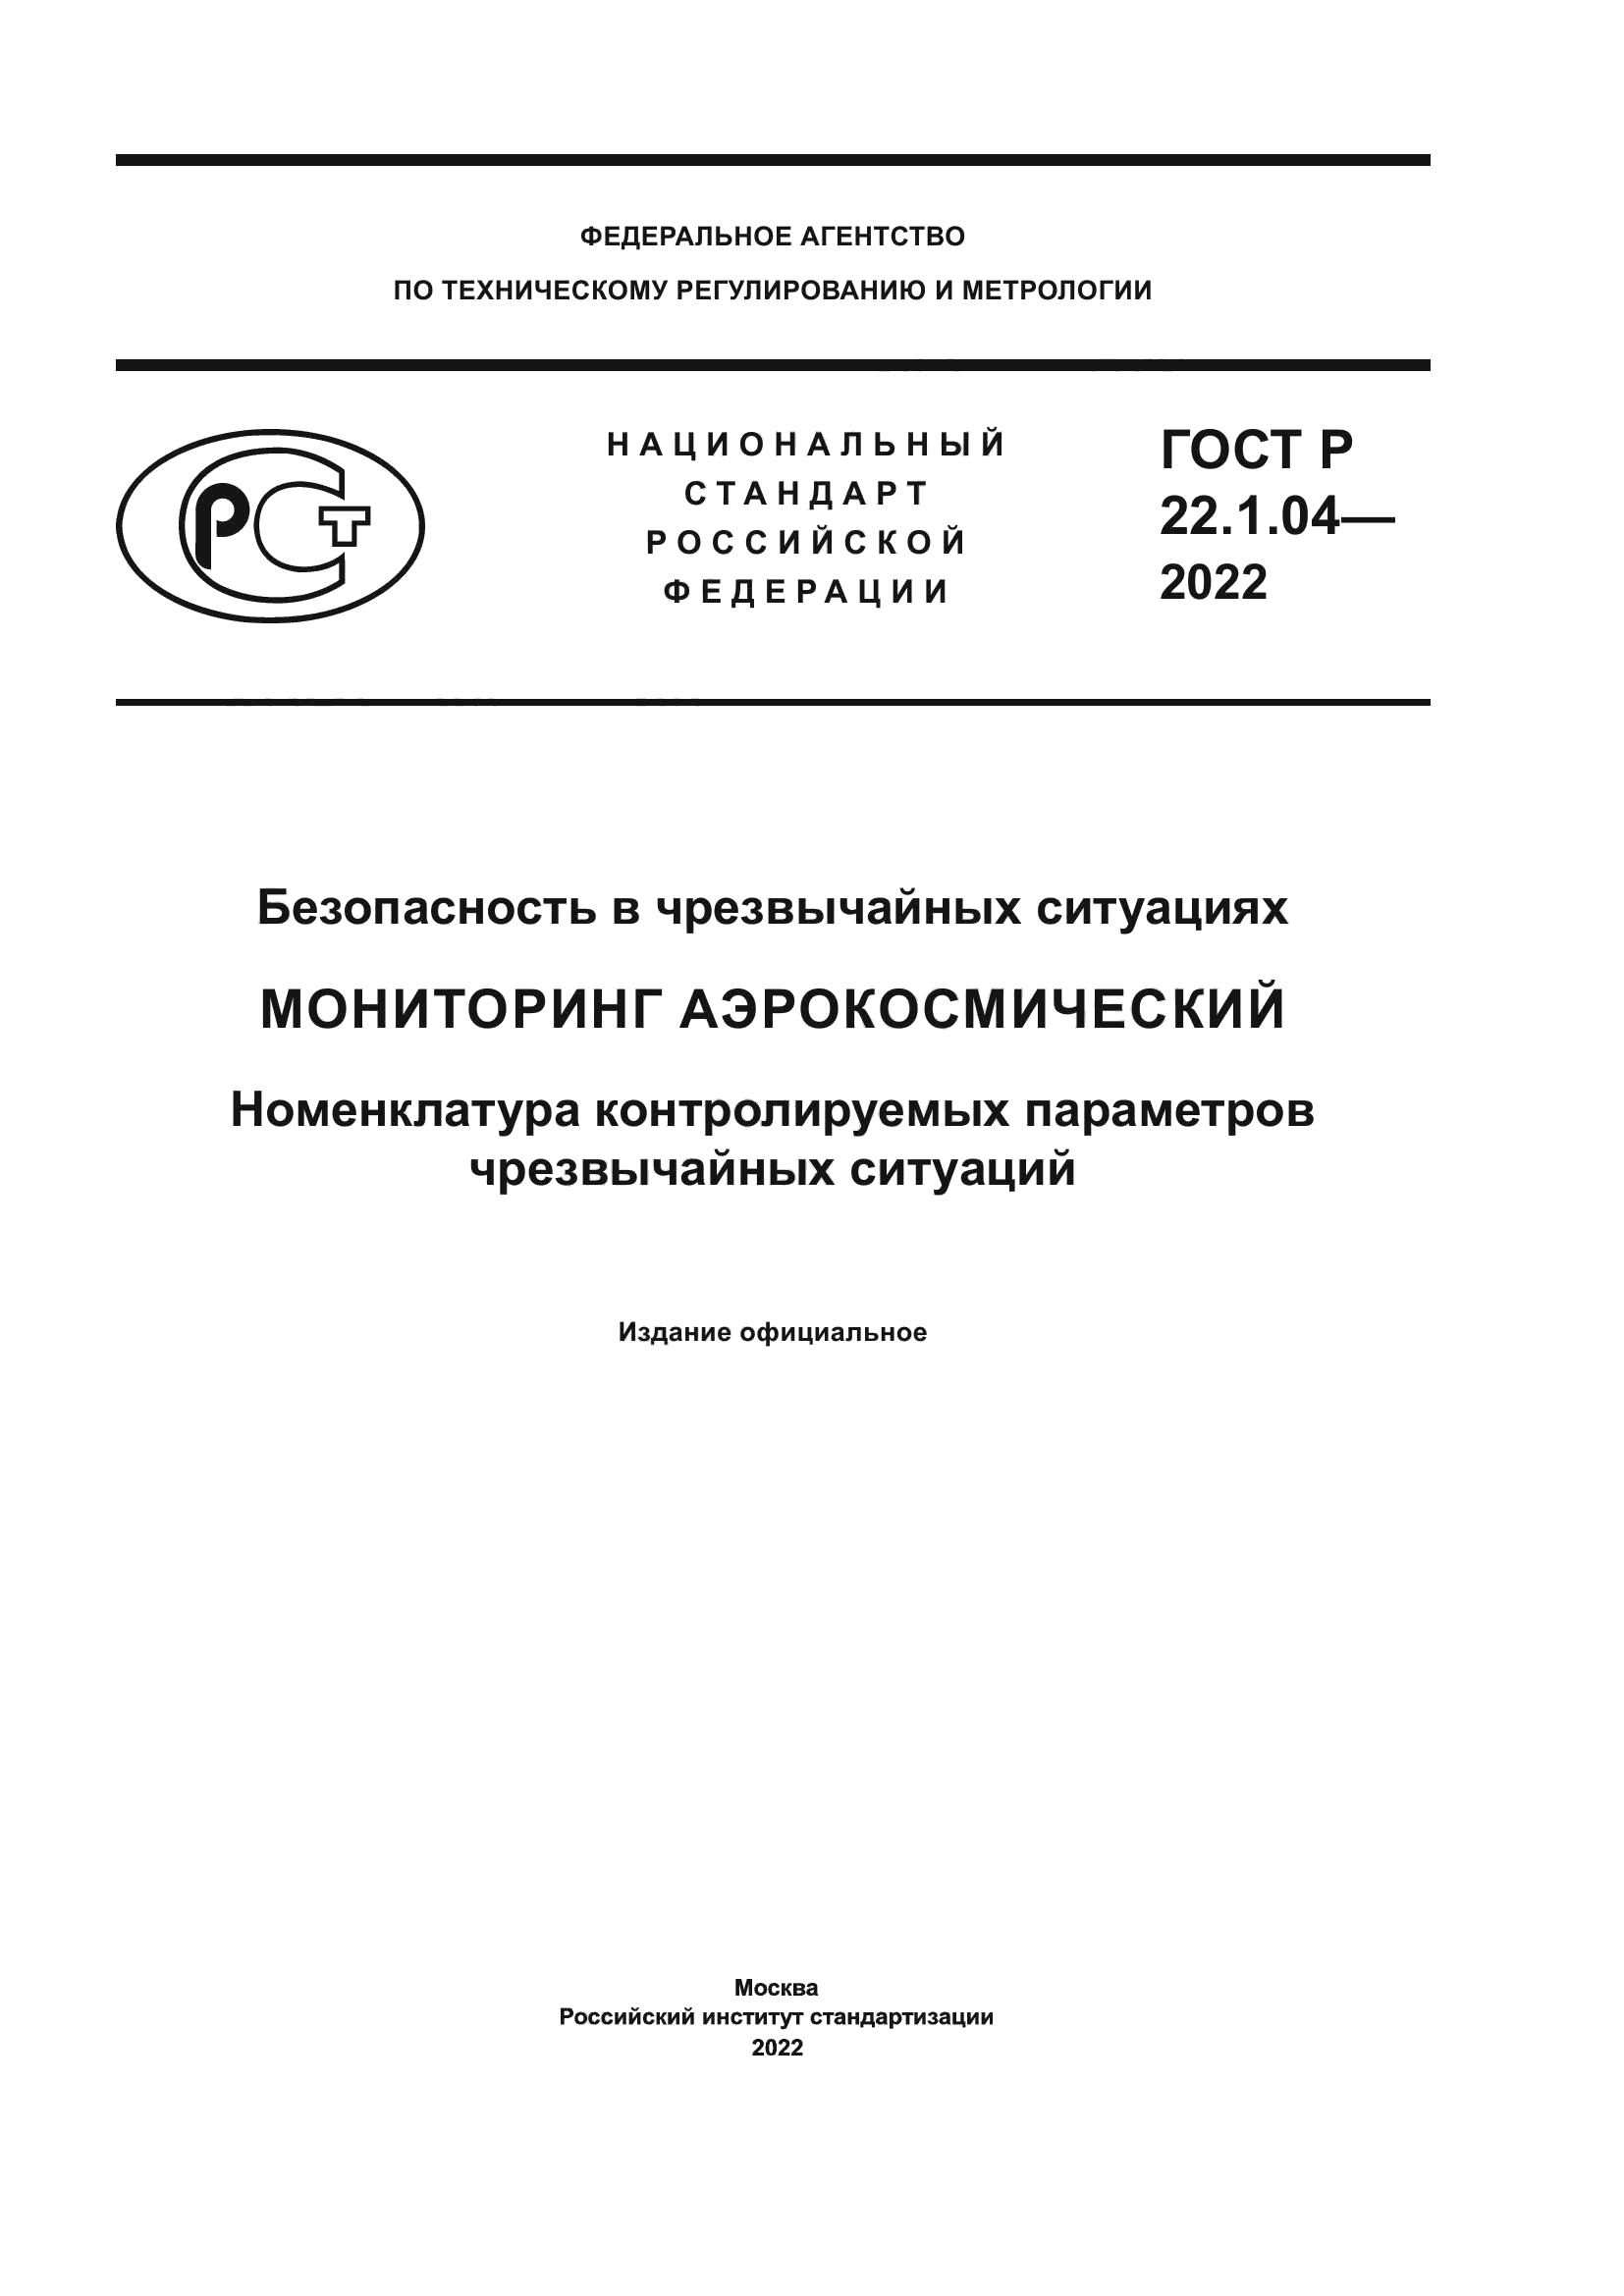 ГОСТ Р 22.1.04-2022